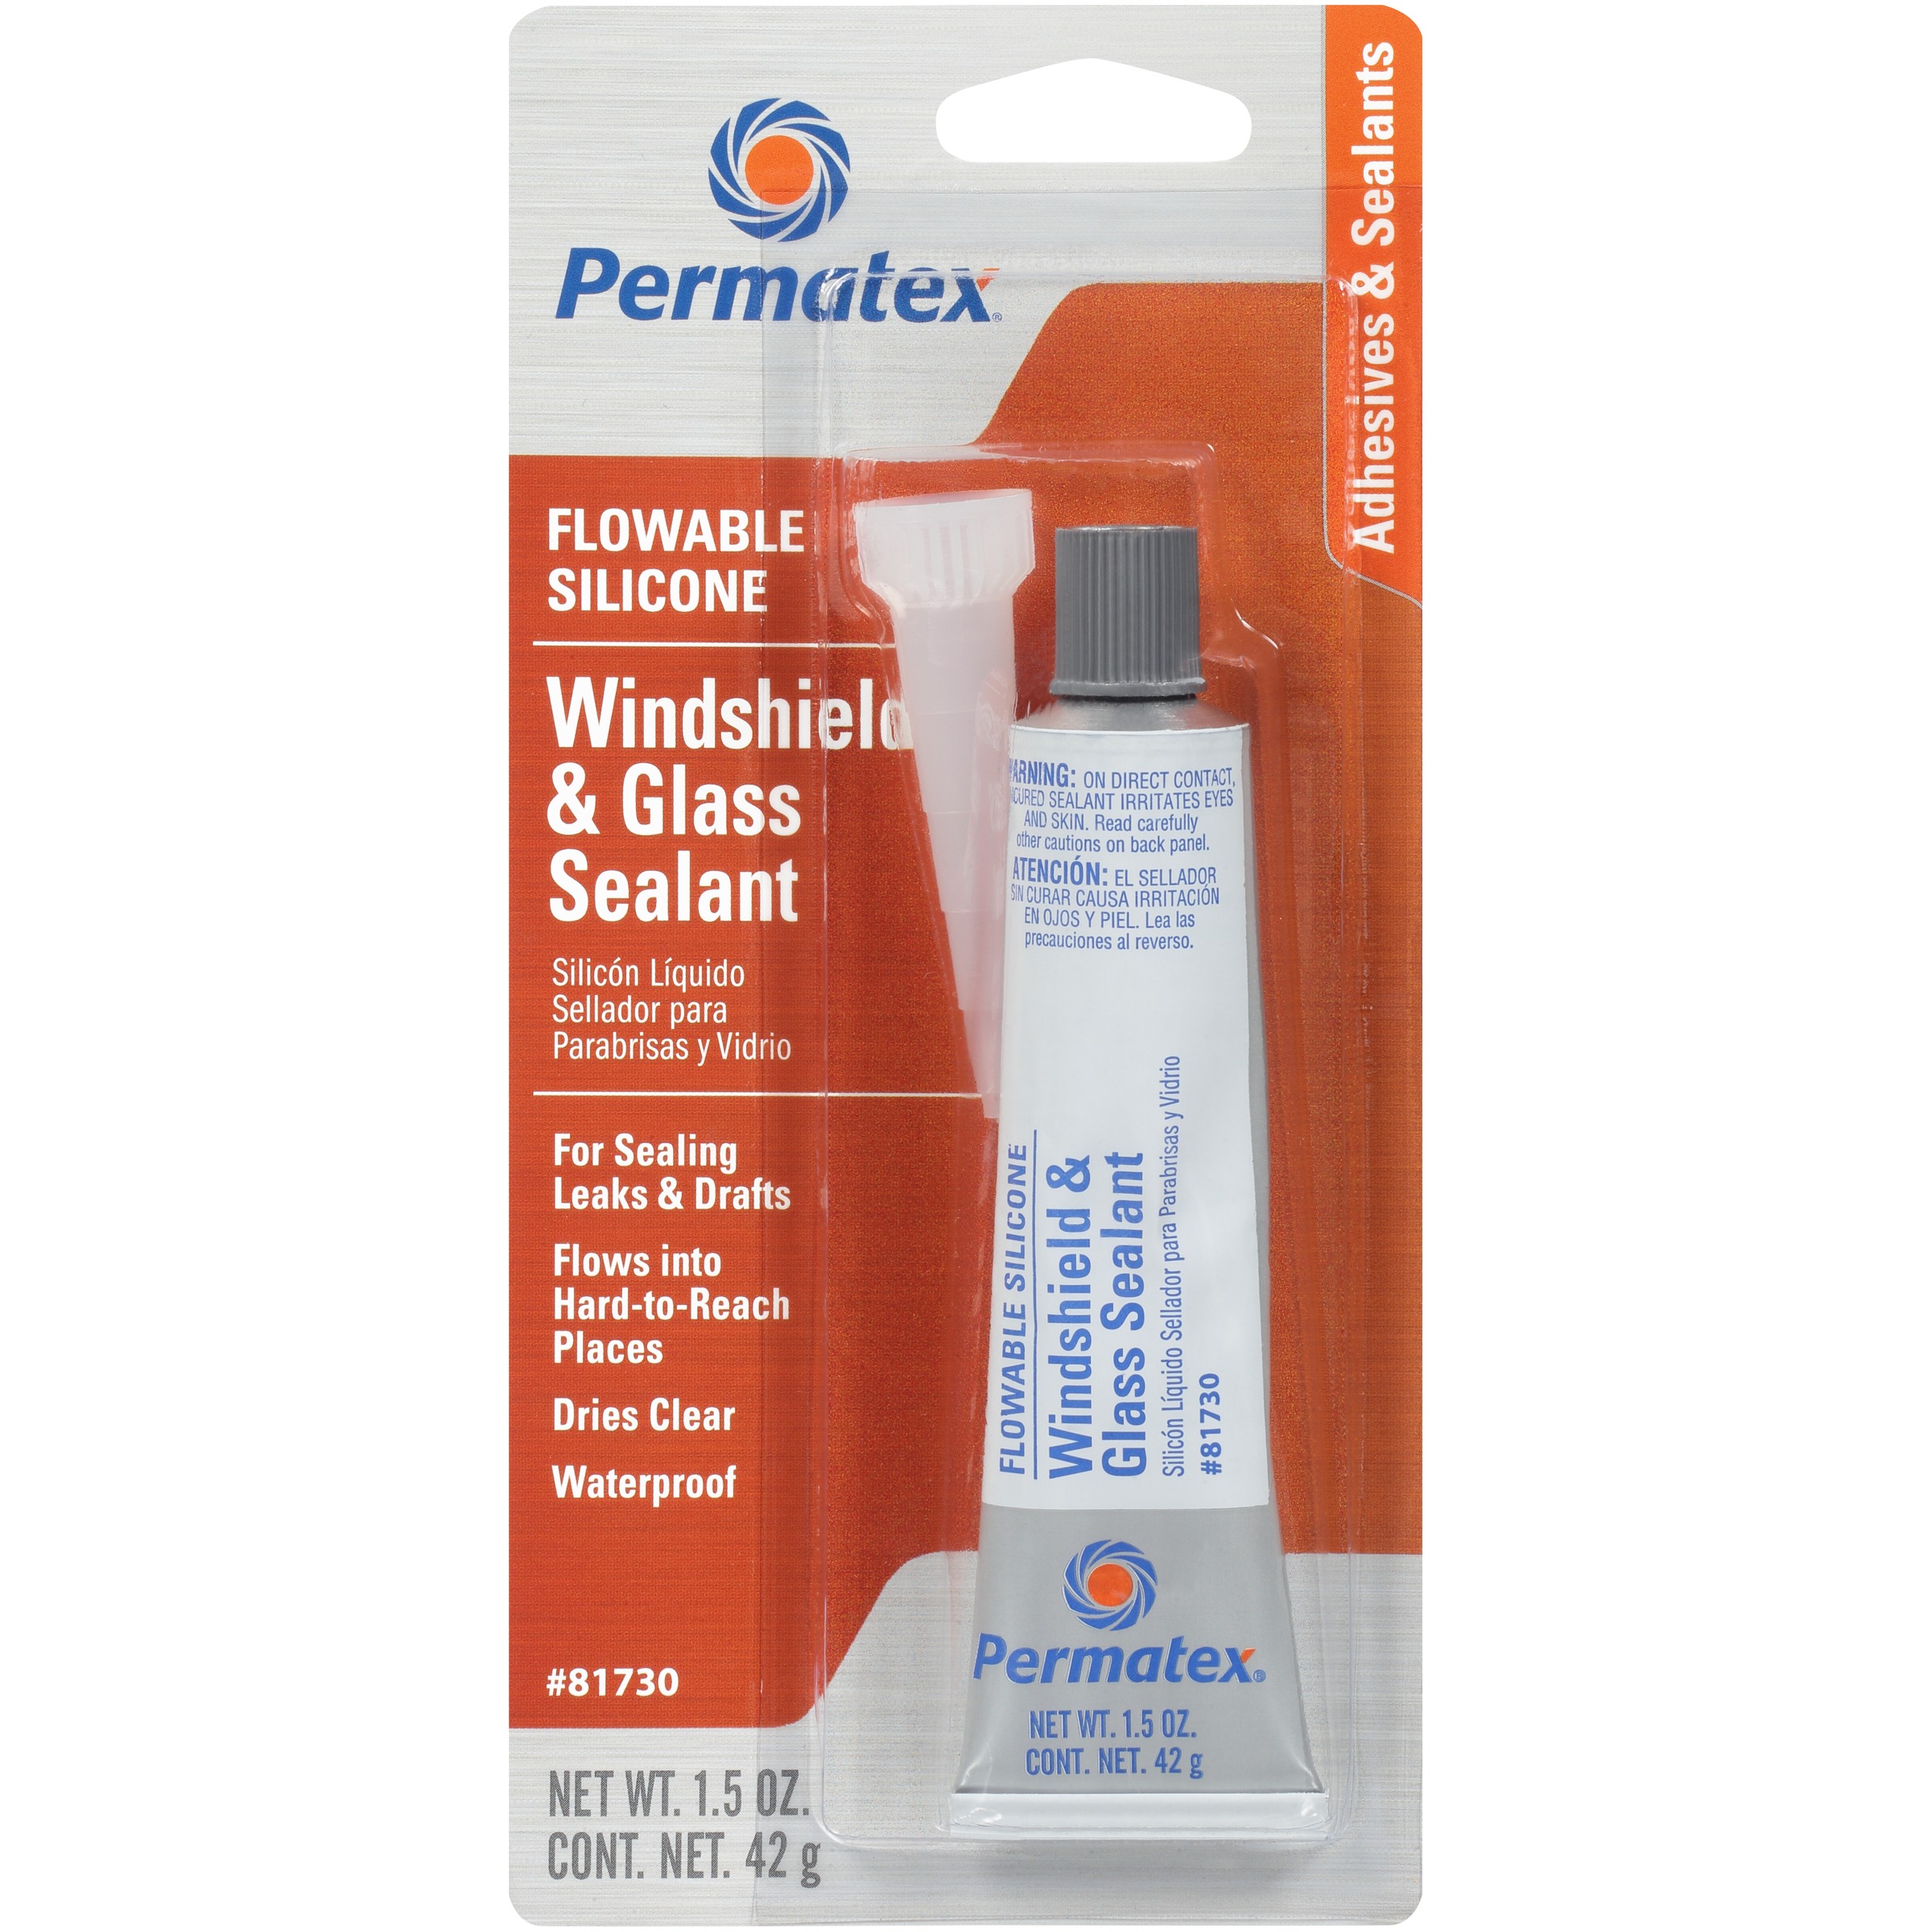 Permatex可流动硅胶挡风玻璃和玻璃密封剂